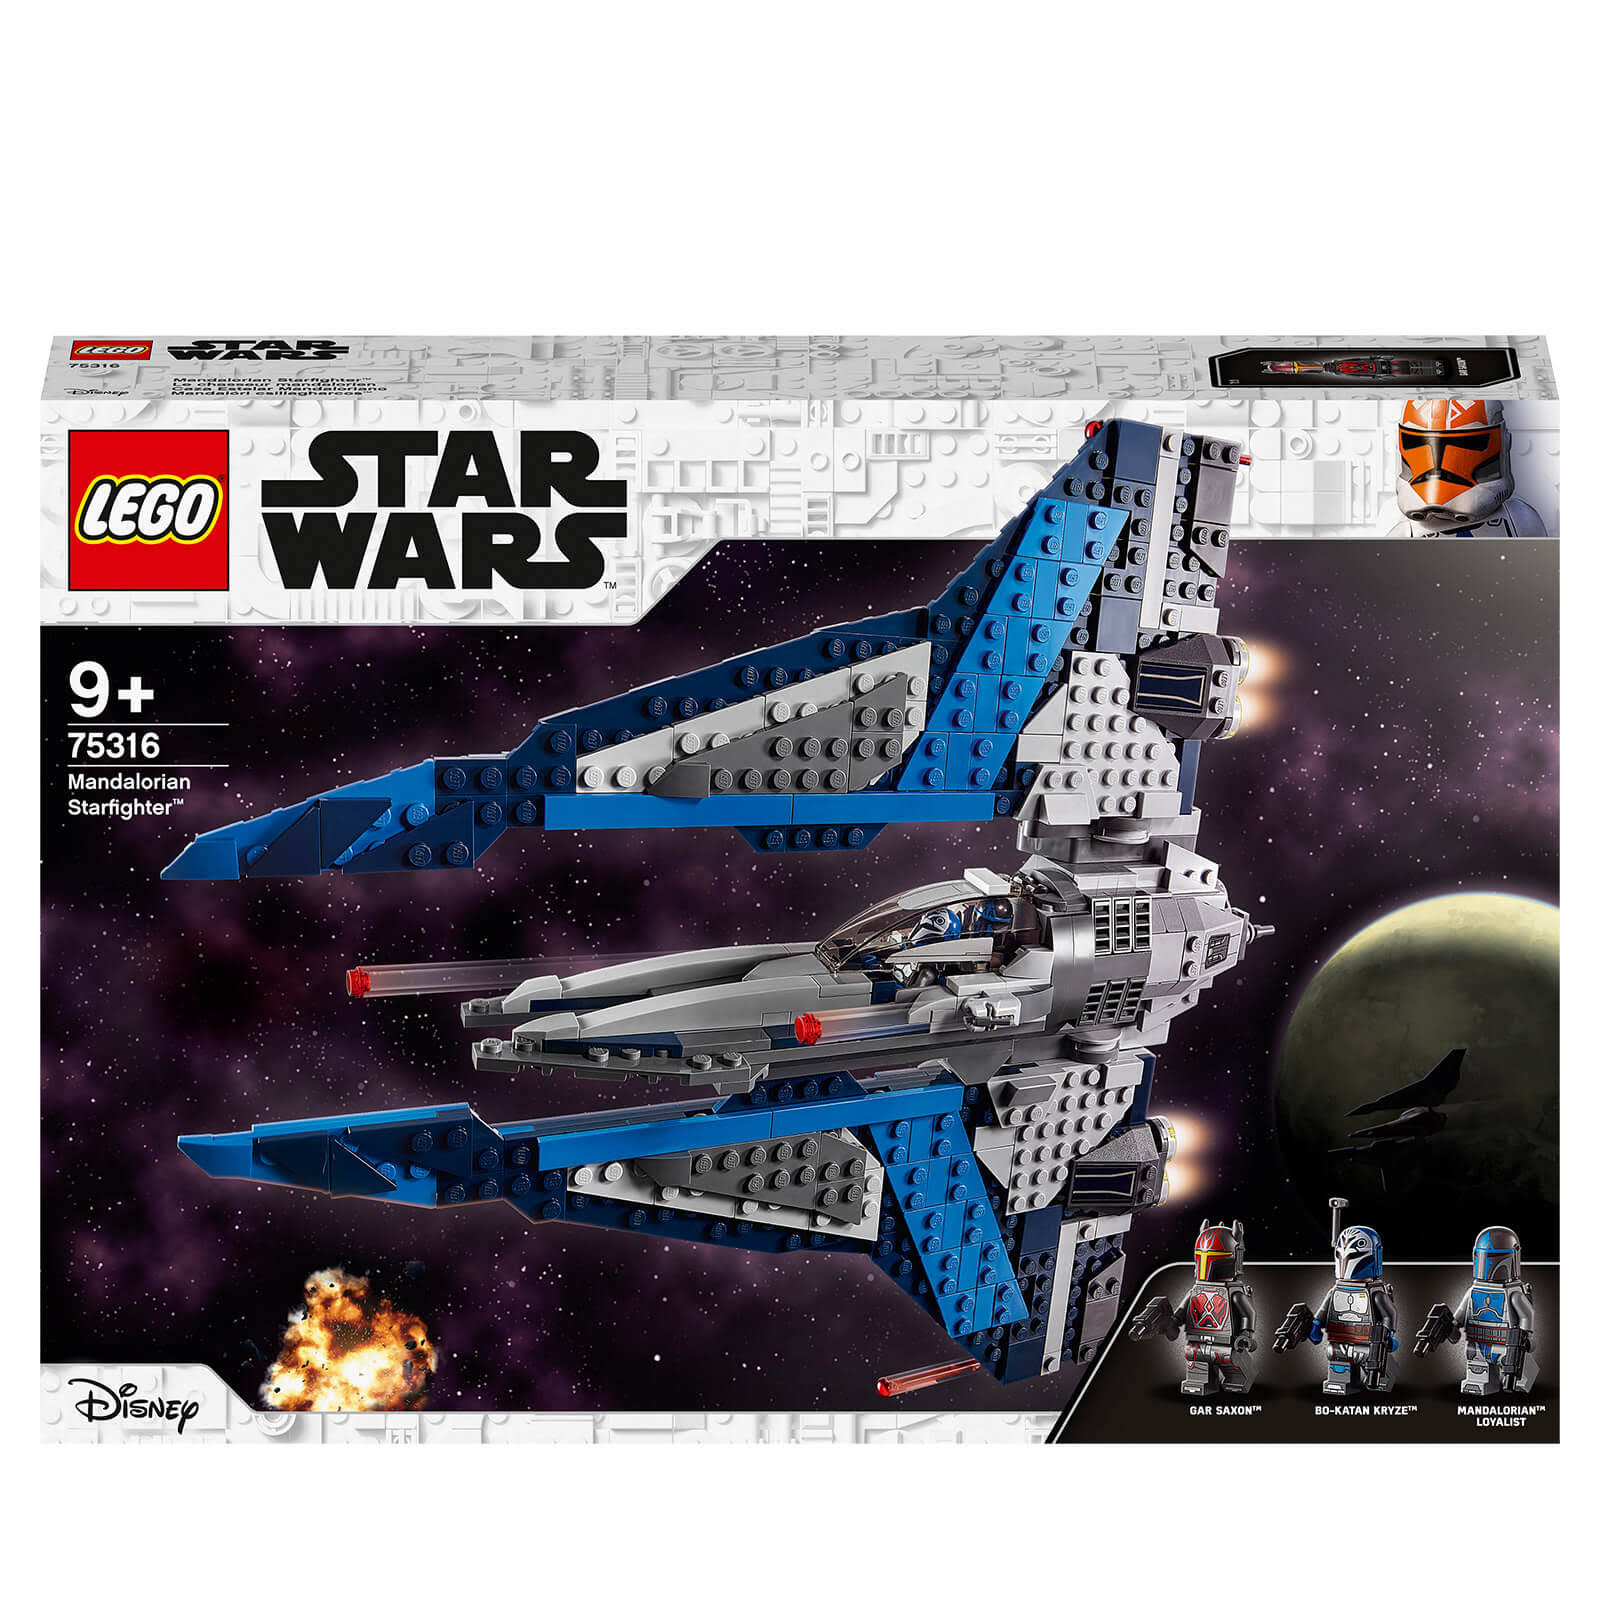 LEGO 75316 Star Wars Mandalorian Starfighter Building Toy